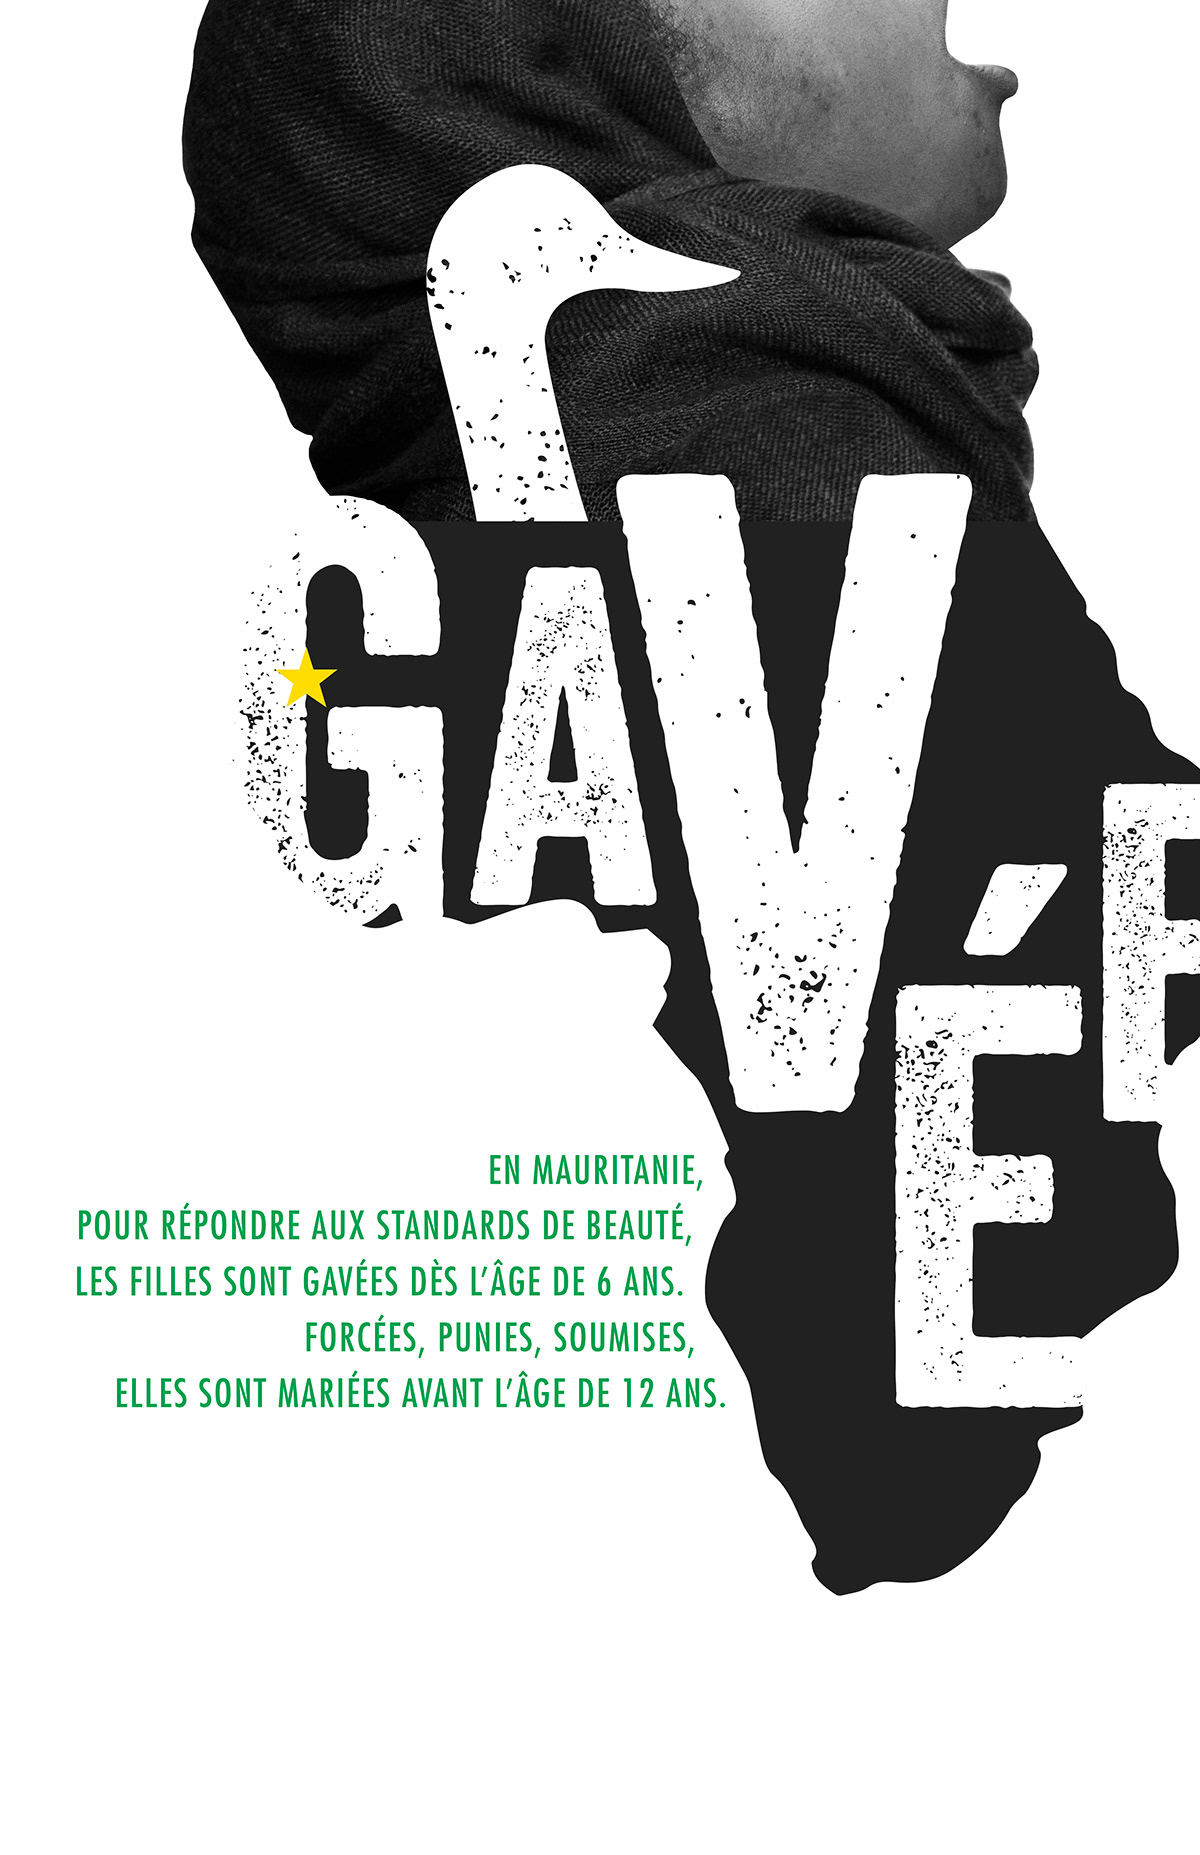 affiche poster mauritanie Gavage canard sensibilisation dénoncer 